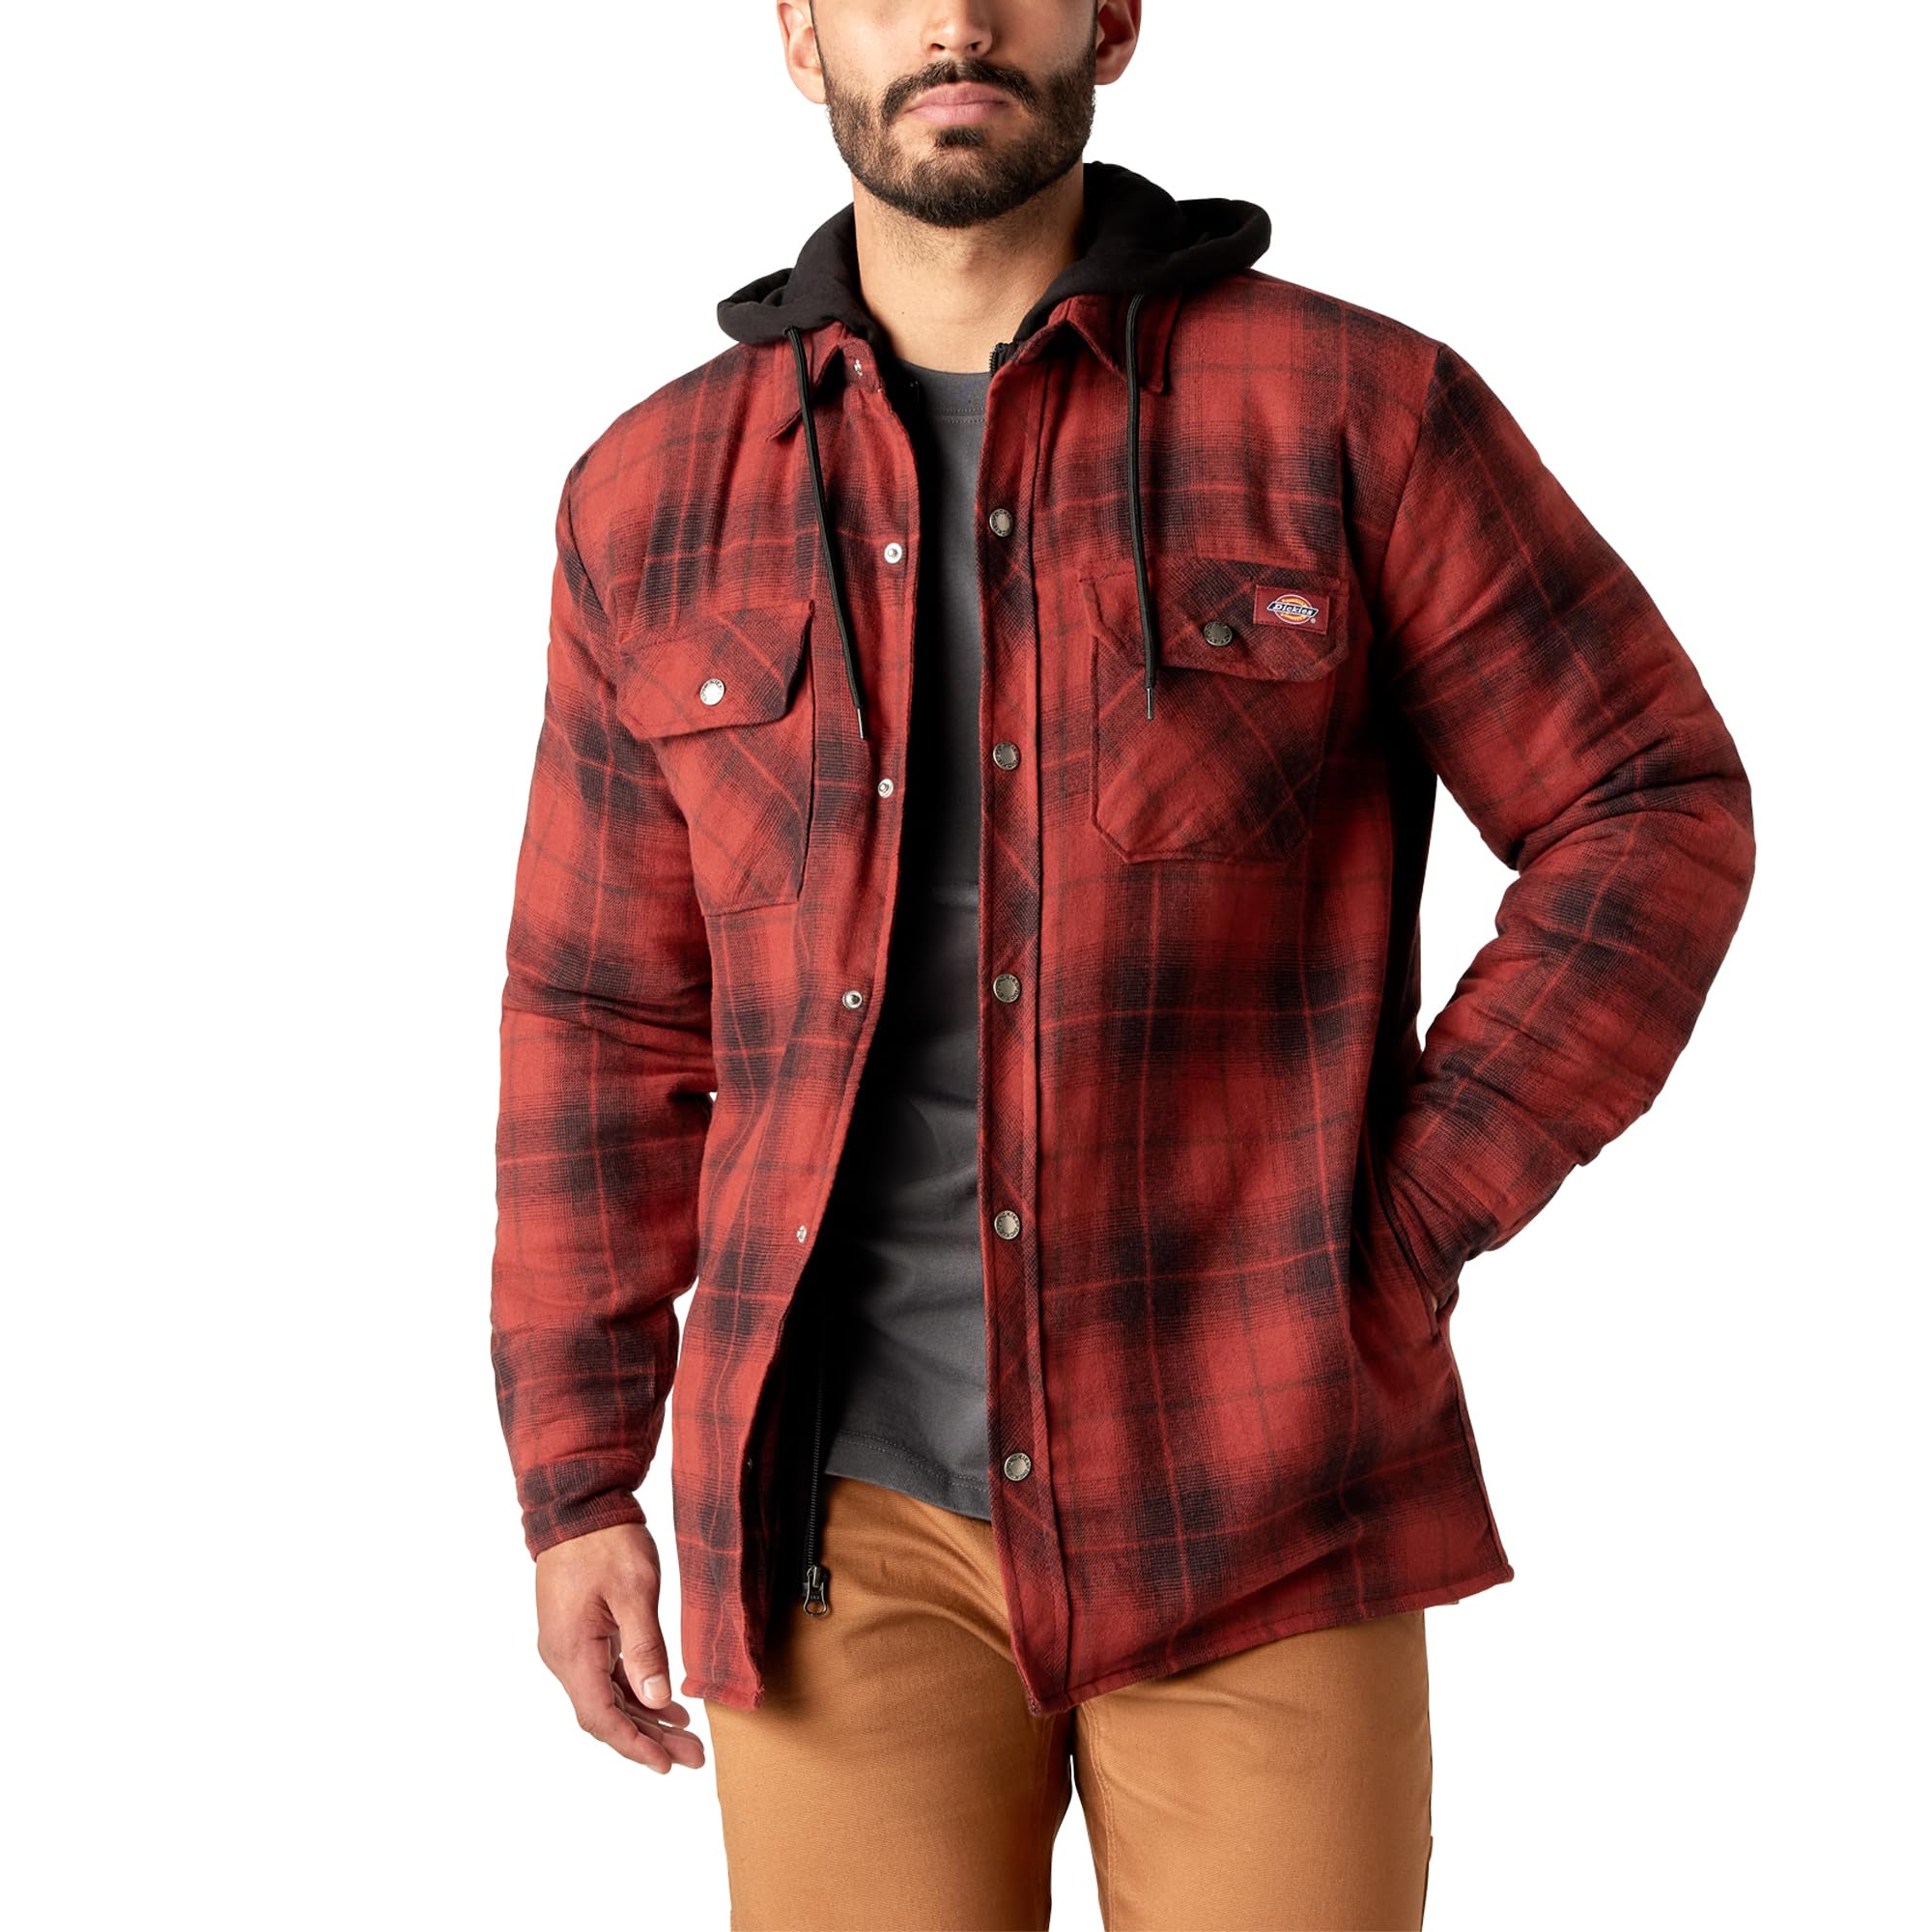 Dickies Men's Water Repellent Flannel Hooded Shirt Jacket, Brick Black Ombre Plaid $19.98